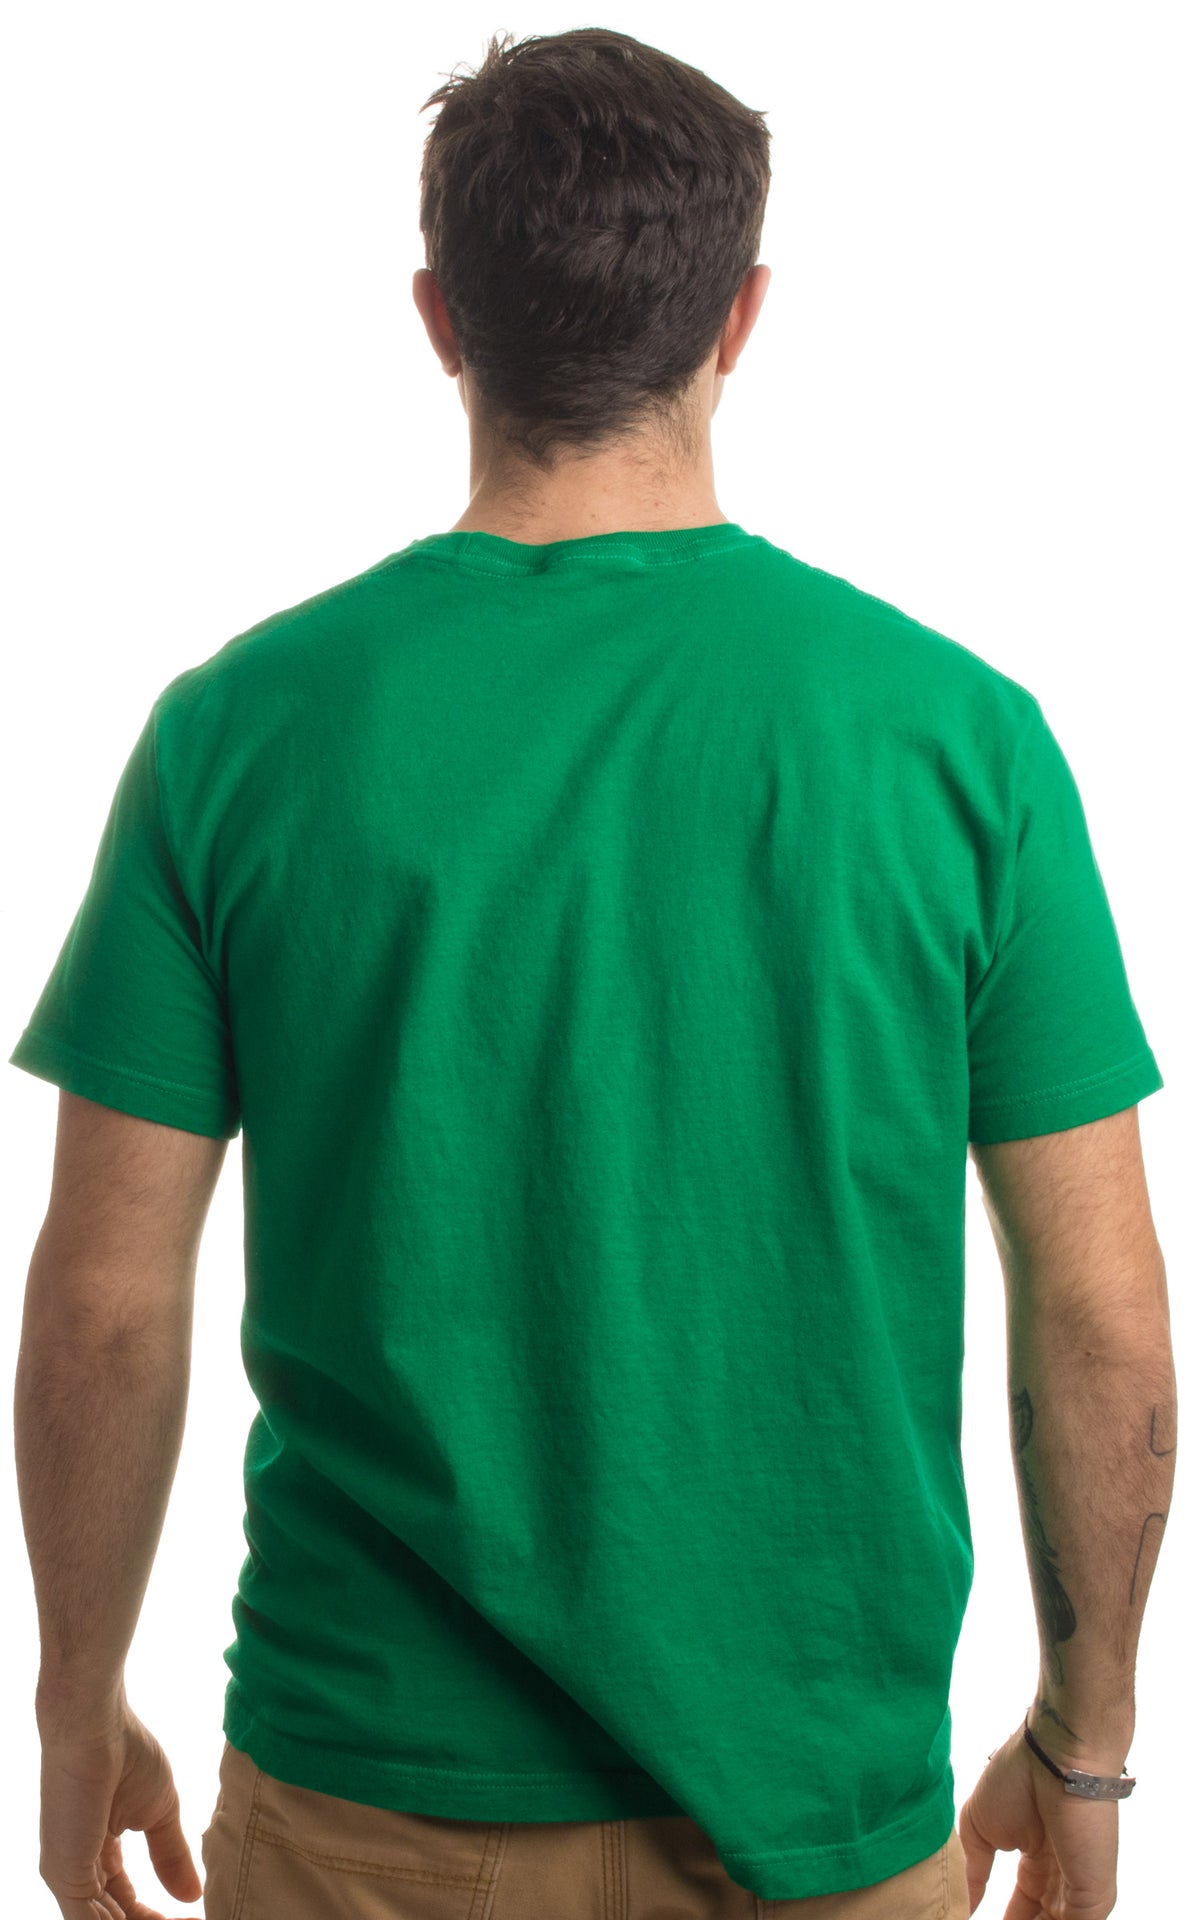 Leprechaun Tuxedo | Funny St. Patrick's Day Irish Paddy Costume for Men T-shirt